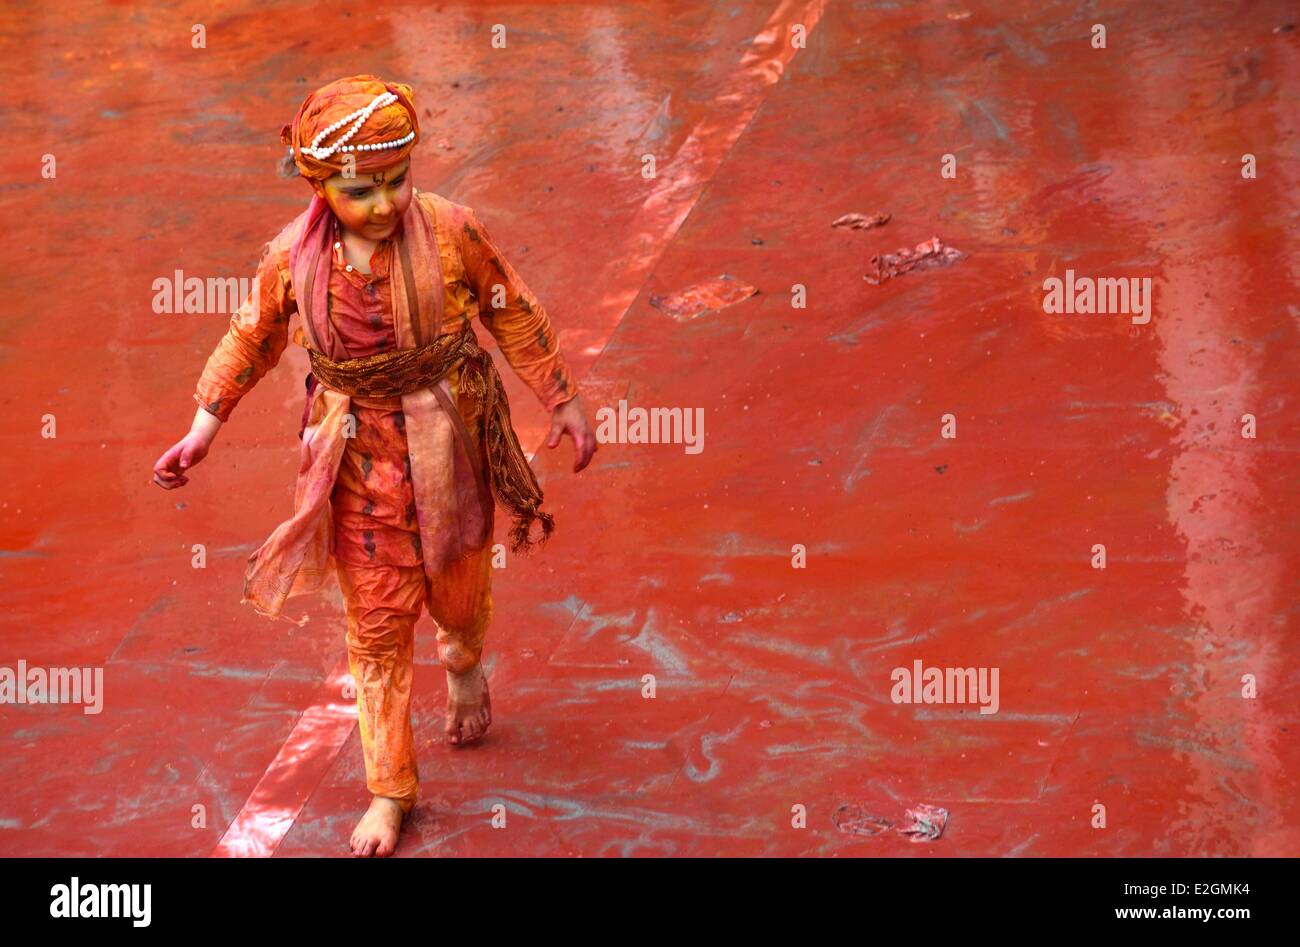 India Uttar Pradesh State in Barsana temple a child walks on ground full of coloured powder during Holi festival celebrations Stock Photo